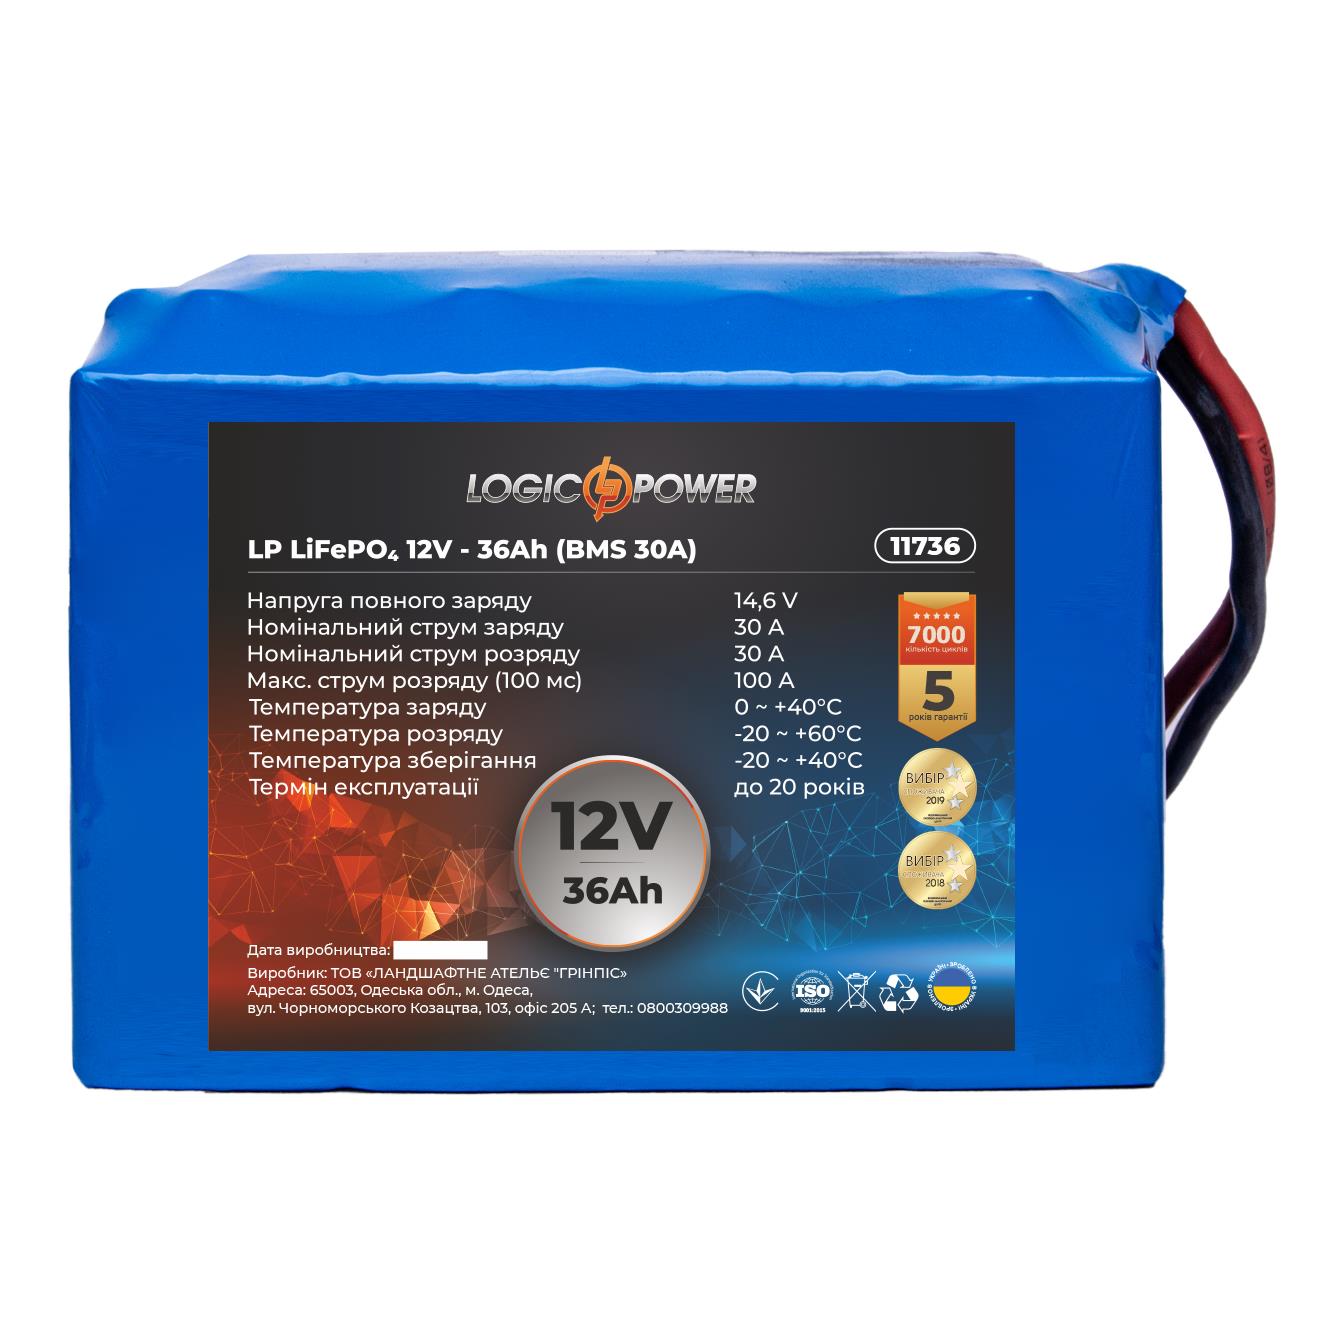 Цена аккумулятор литий-железо-фосфатный LogicPower LP LiFePO4 12V - 36 Ah (BMS 30A) (11736) в Хмельницком